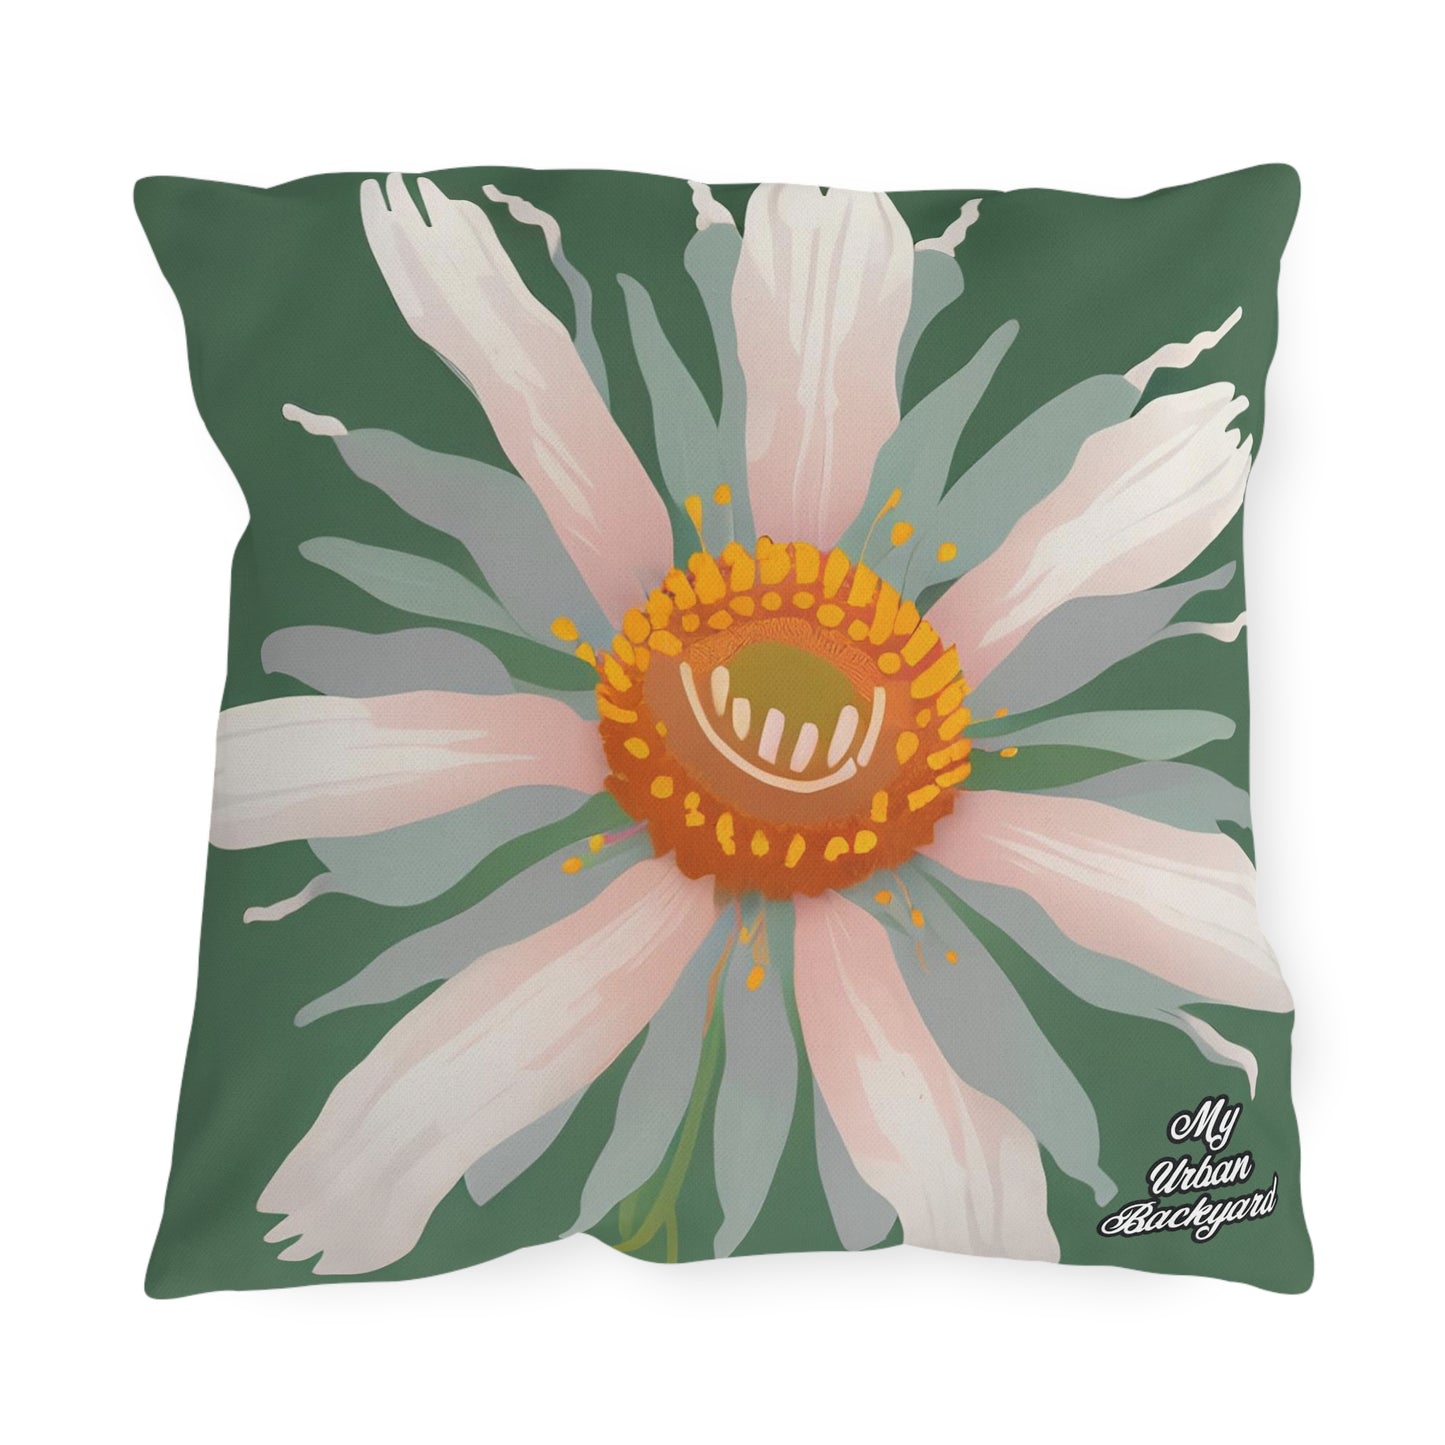 Large White Flower, Versatile Throw Pillow - Home or Office Decor